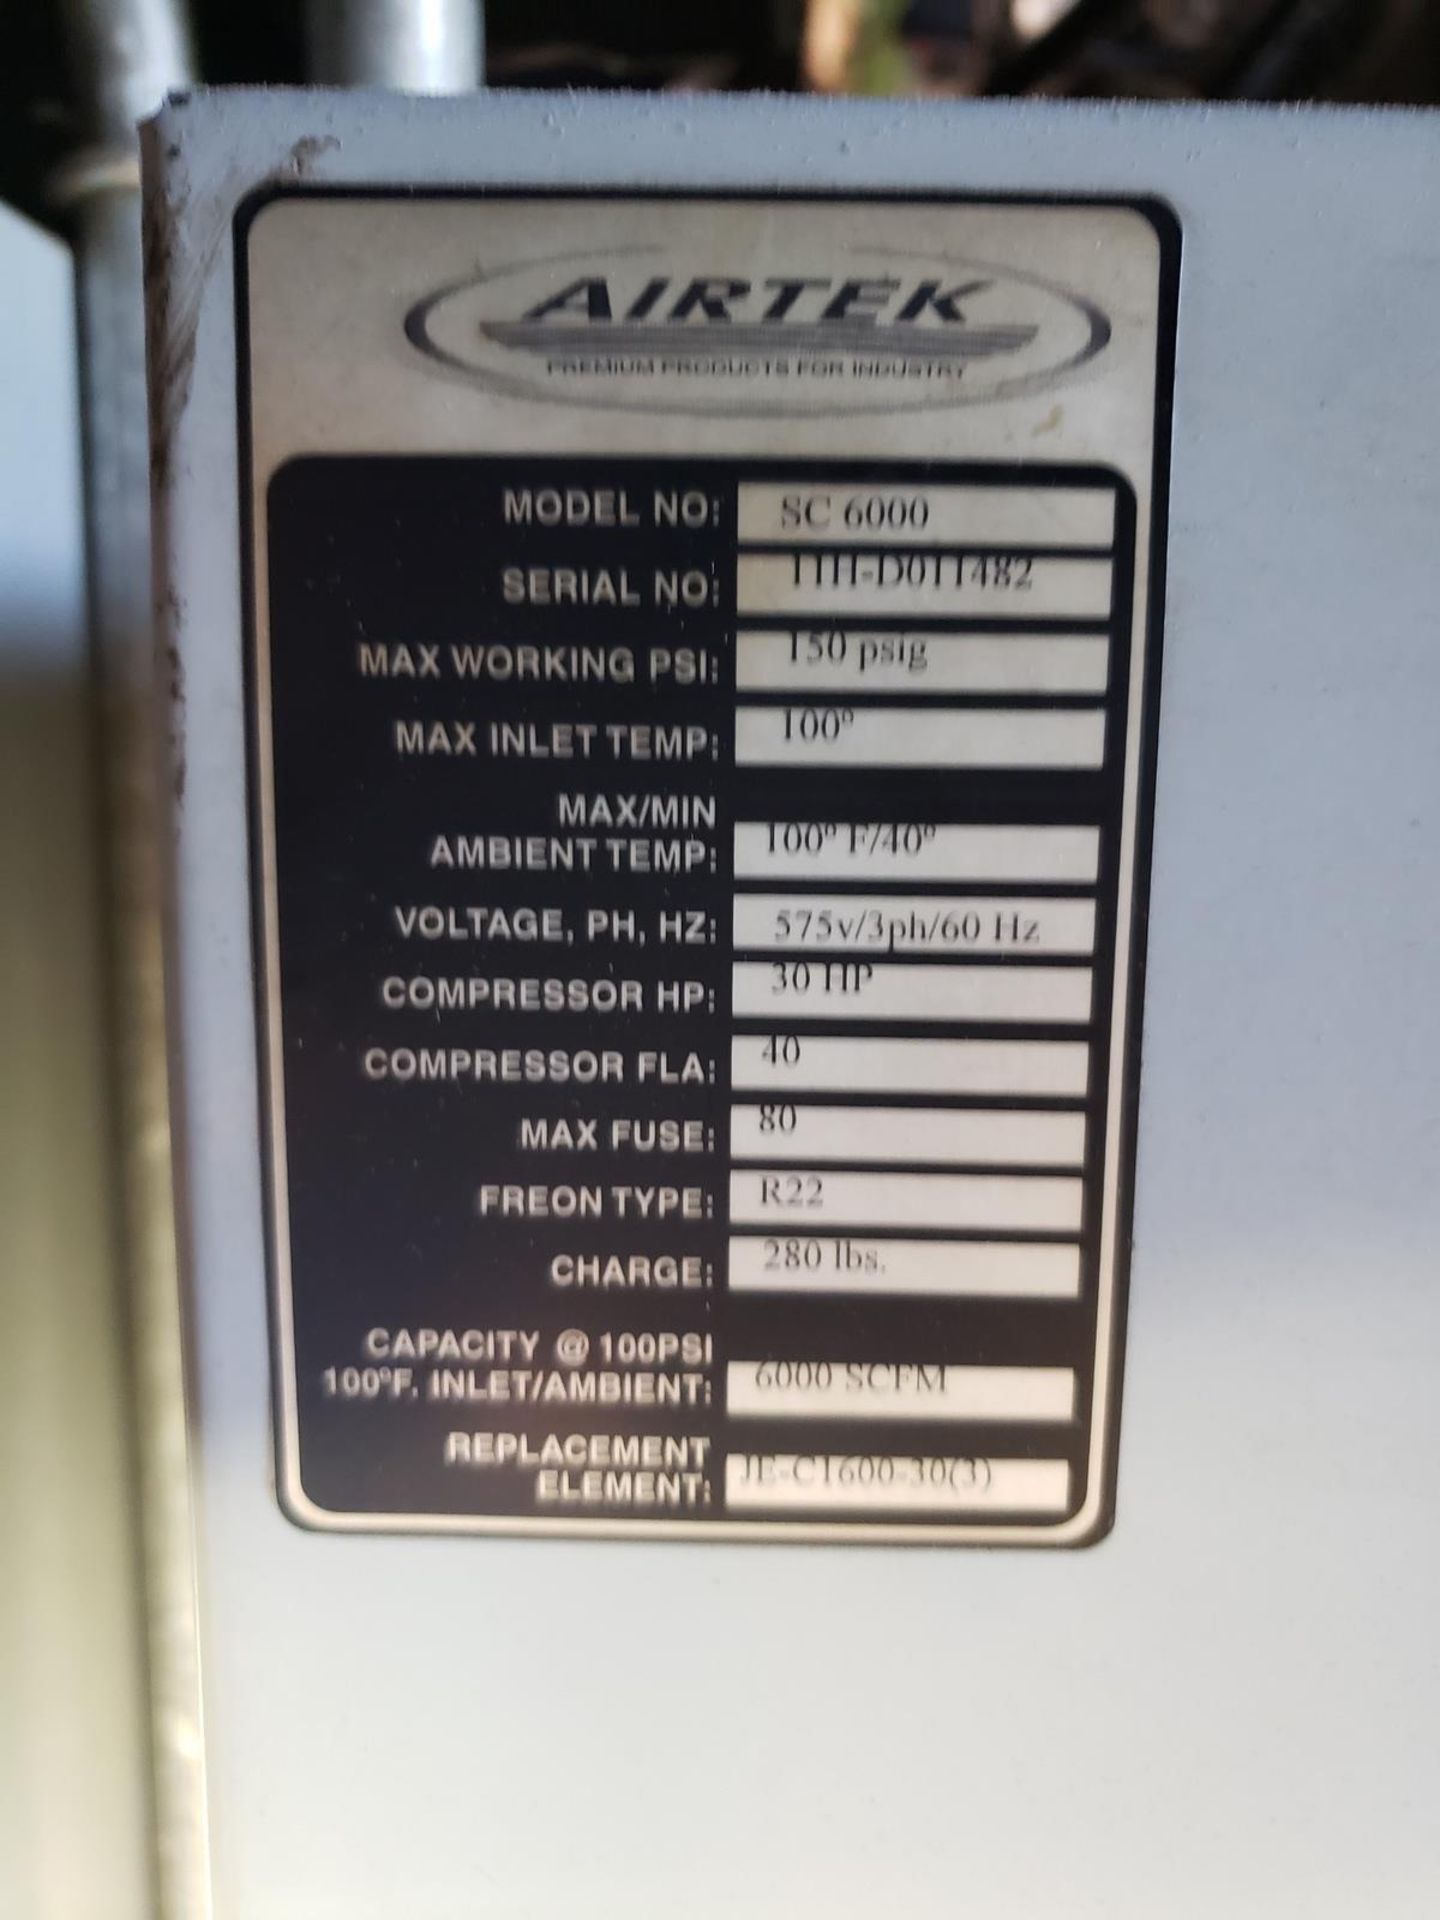 Airtek Refrigerated Air Dryer, M# SC-6000, S/N 11H-D011482 Rig Fee: $550 - Image 2 of 2